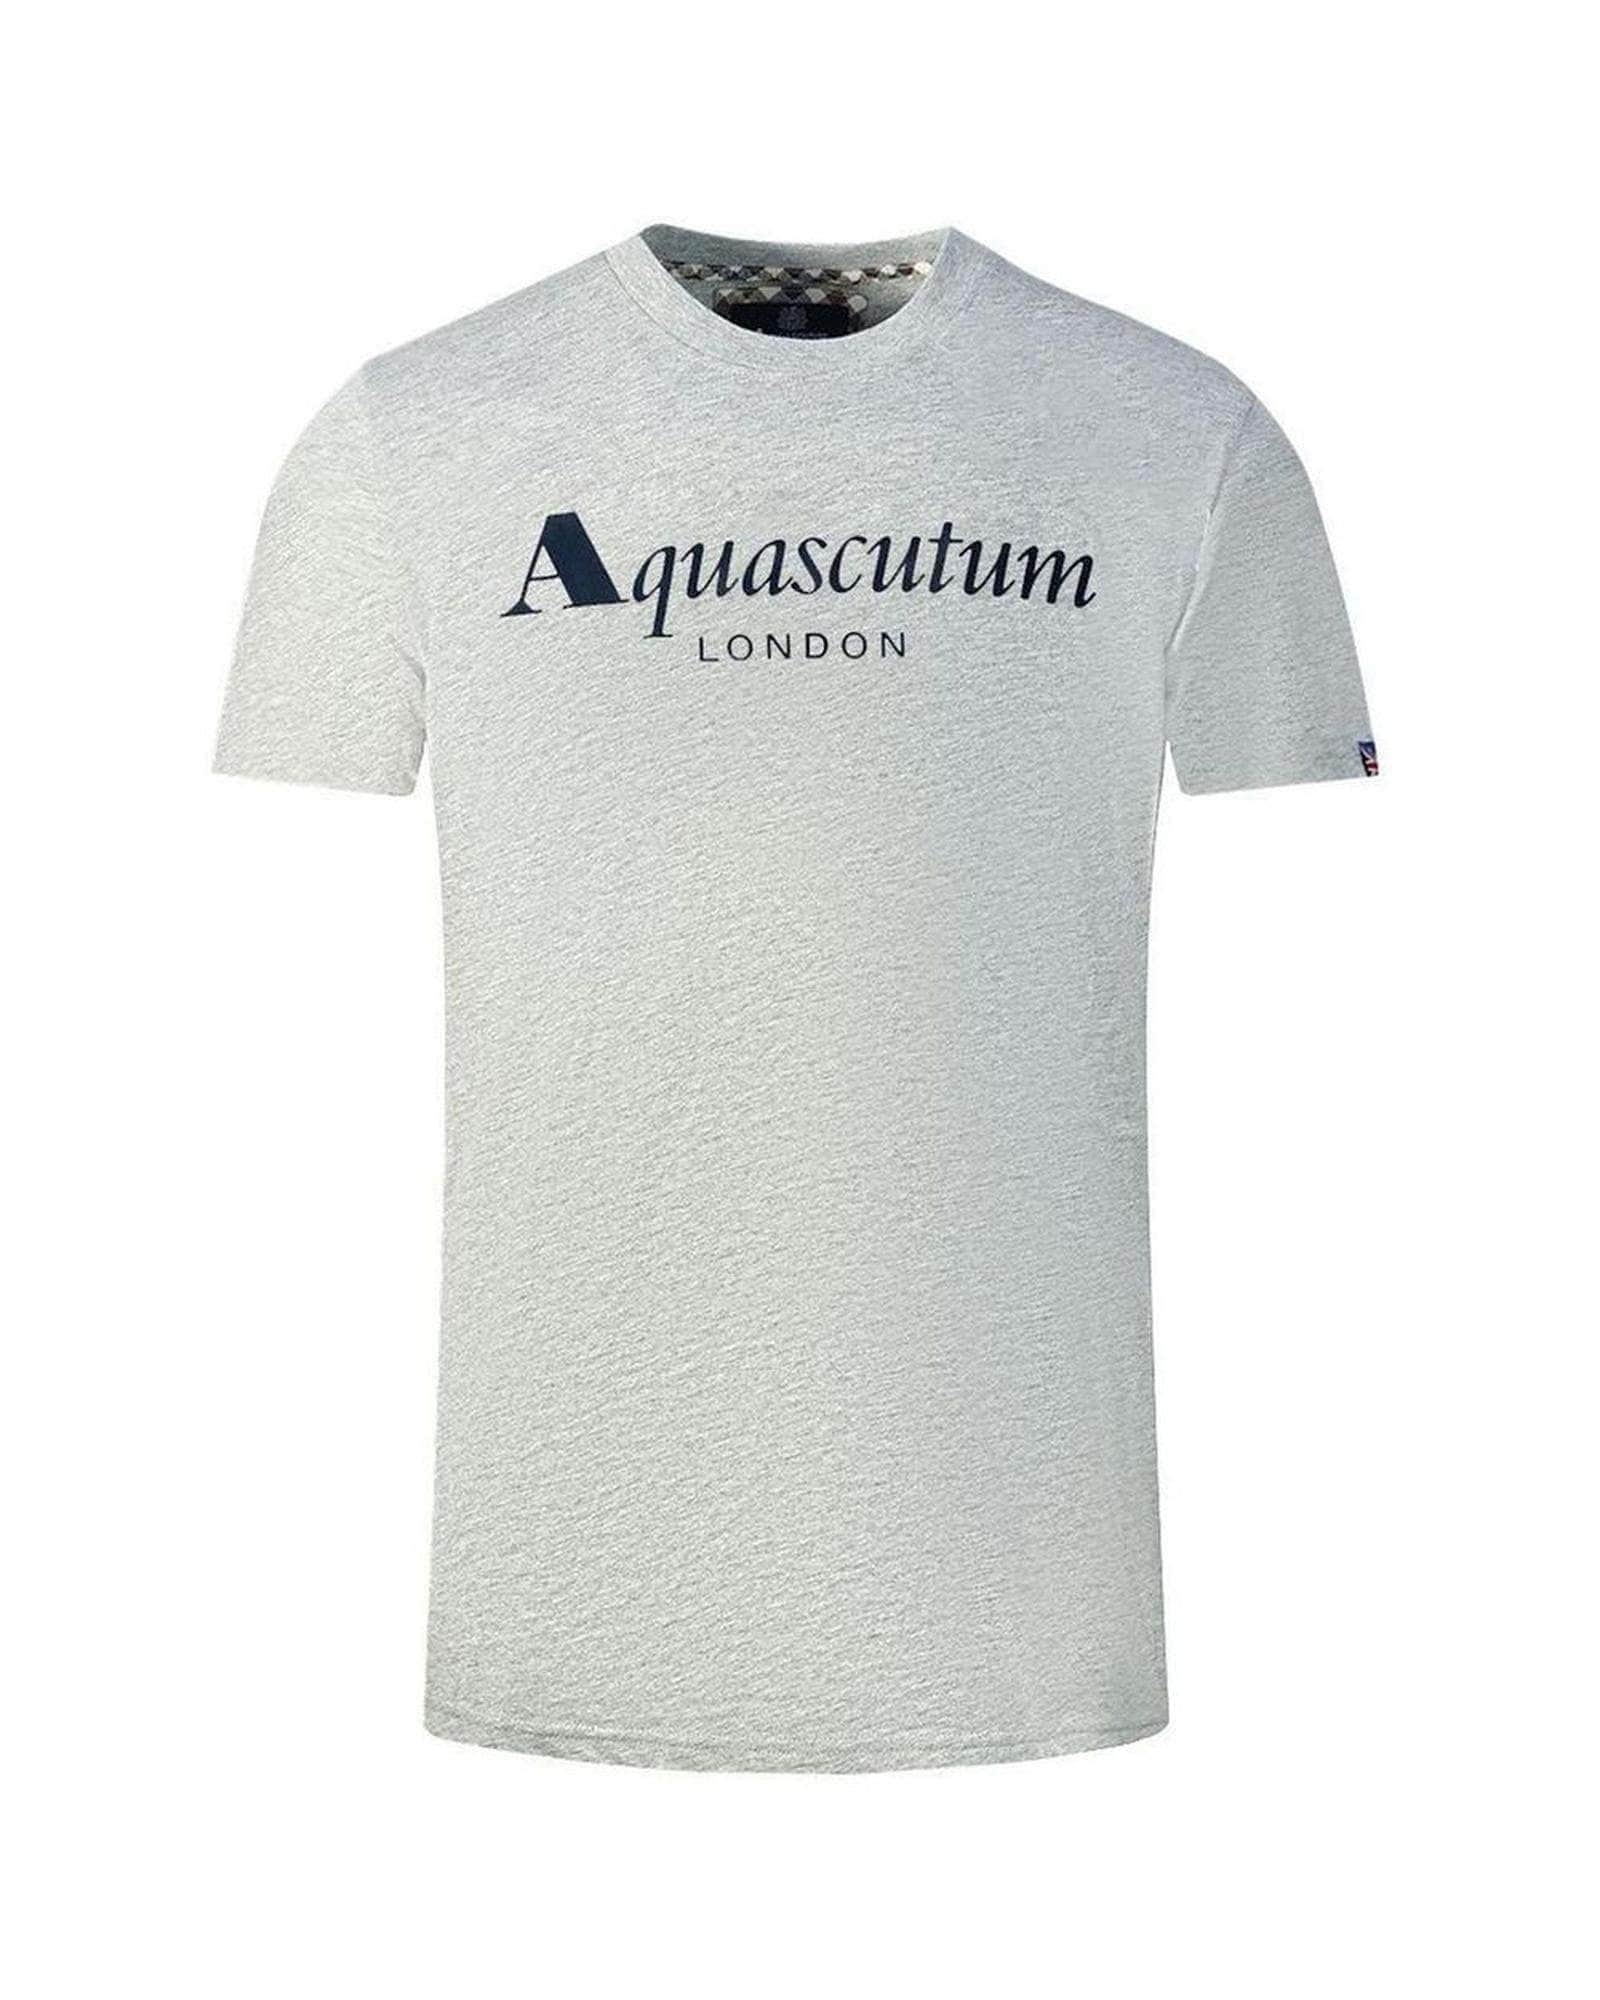 Aquascutum Men'S Midnight Blue/White/Grey Cotton Tee Shirt